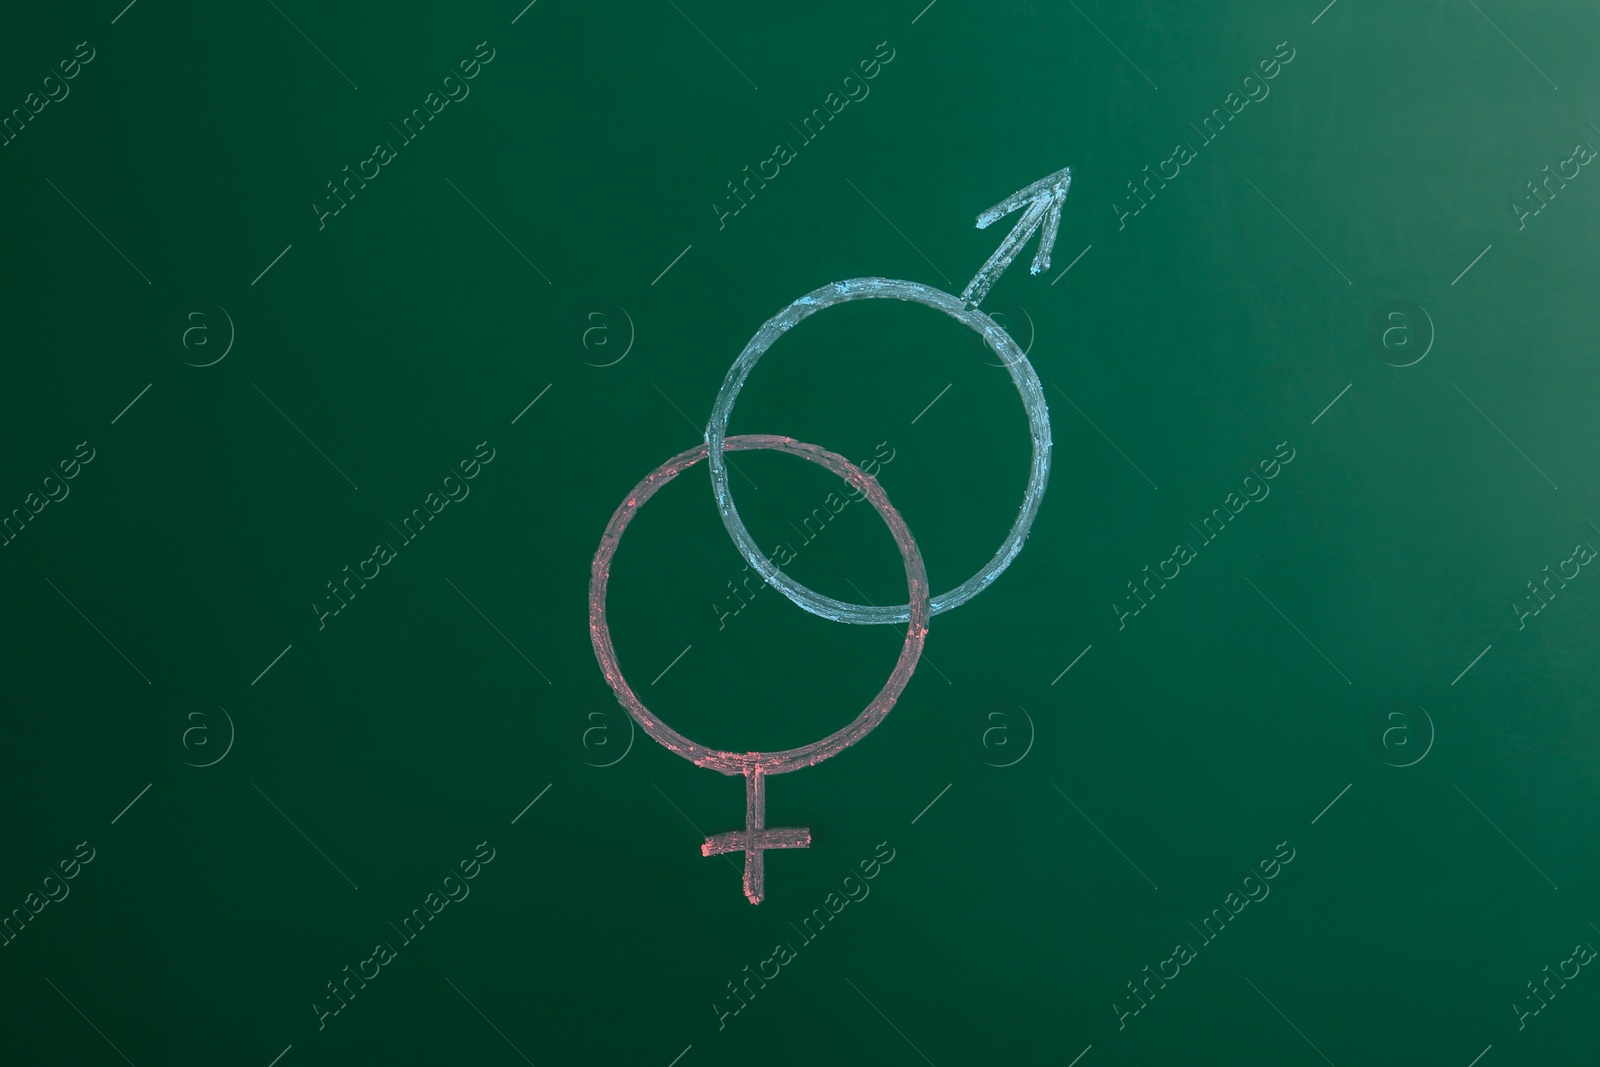 Photo of Gender symbols drawn on green chalkboard. Sex education